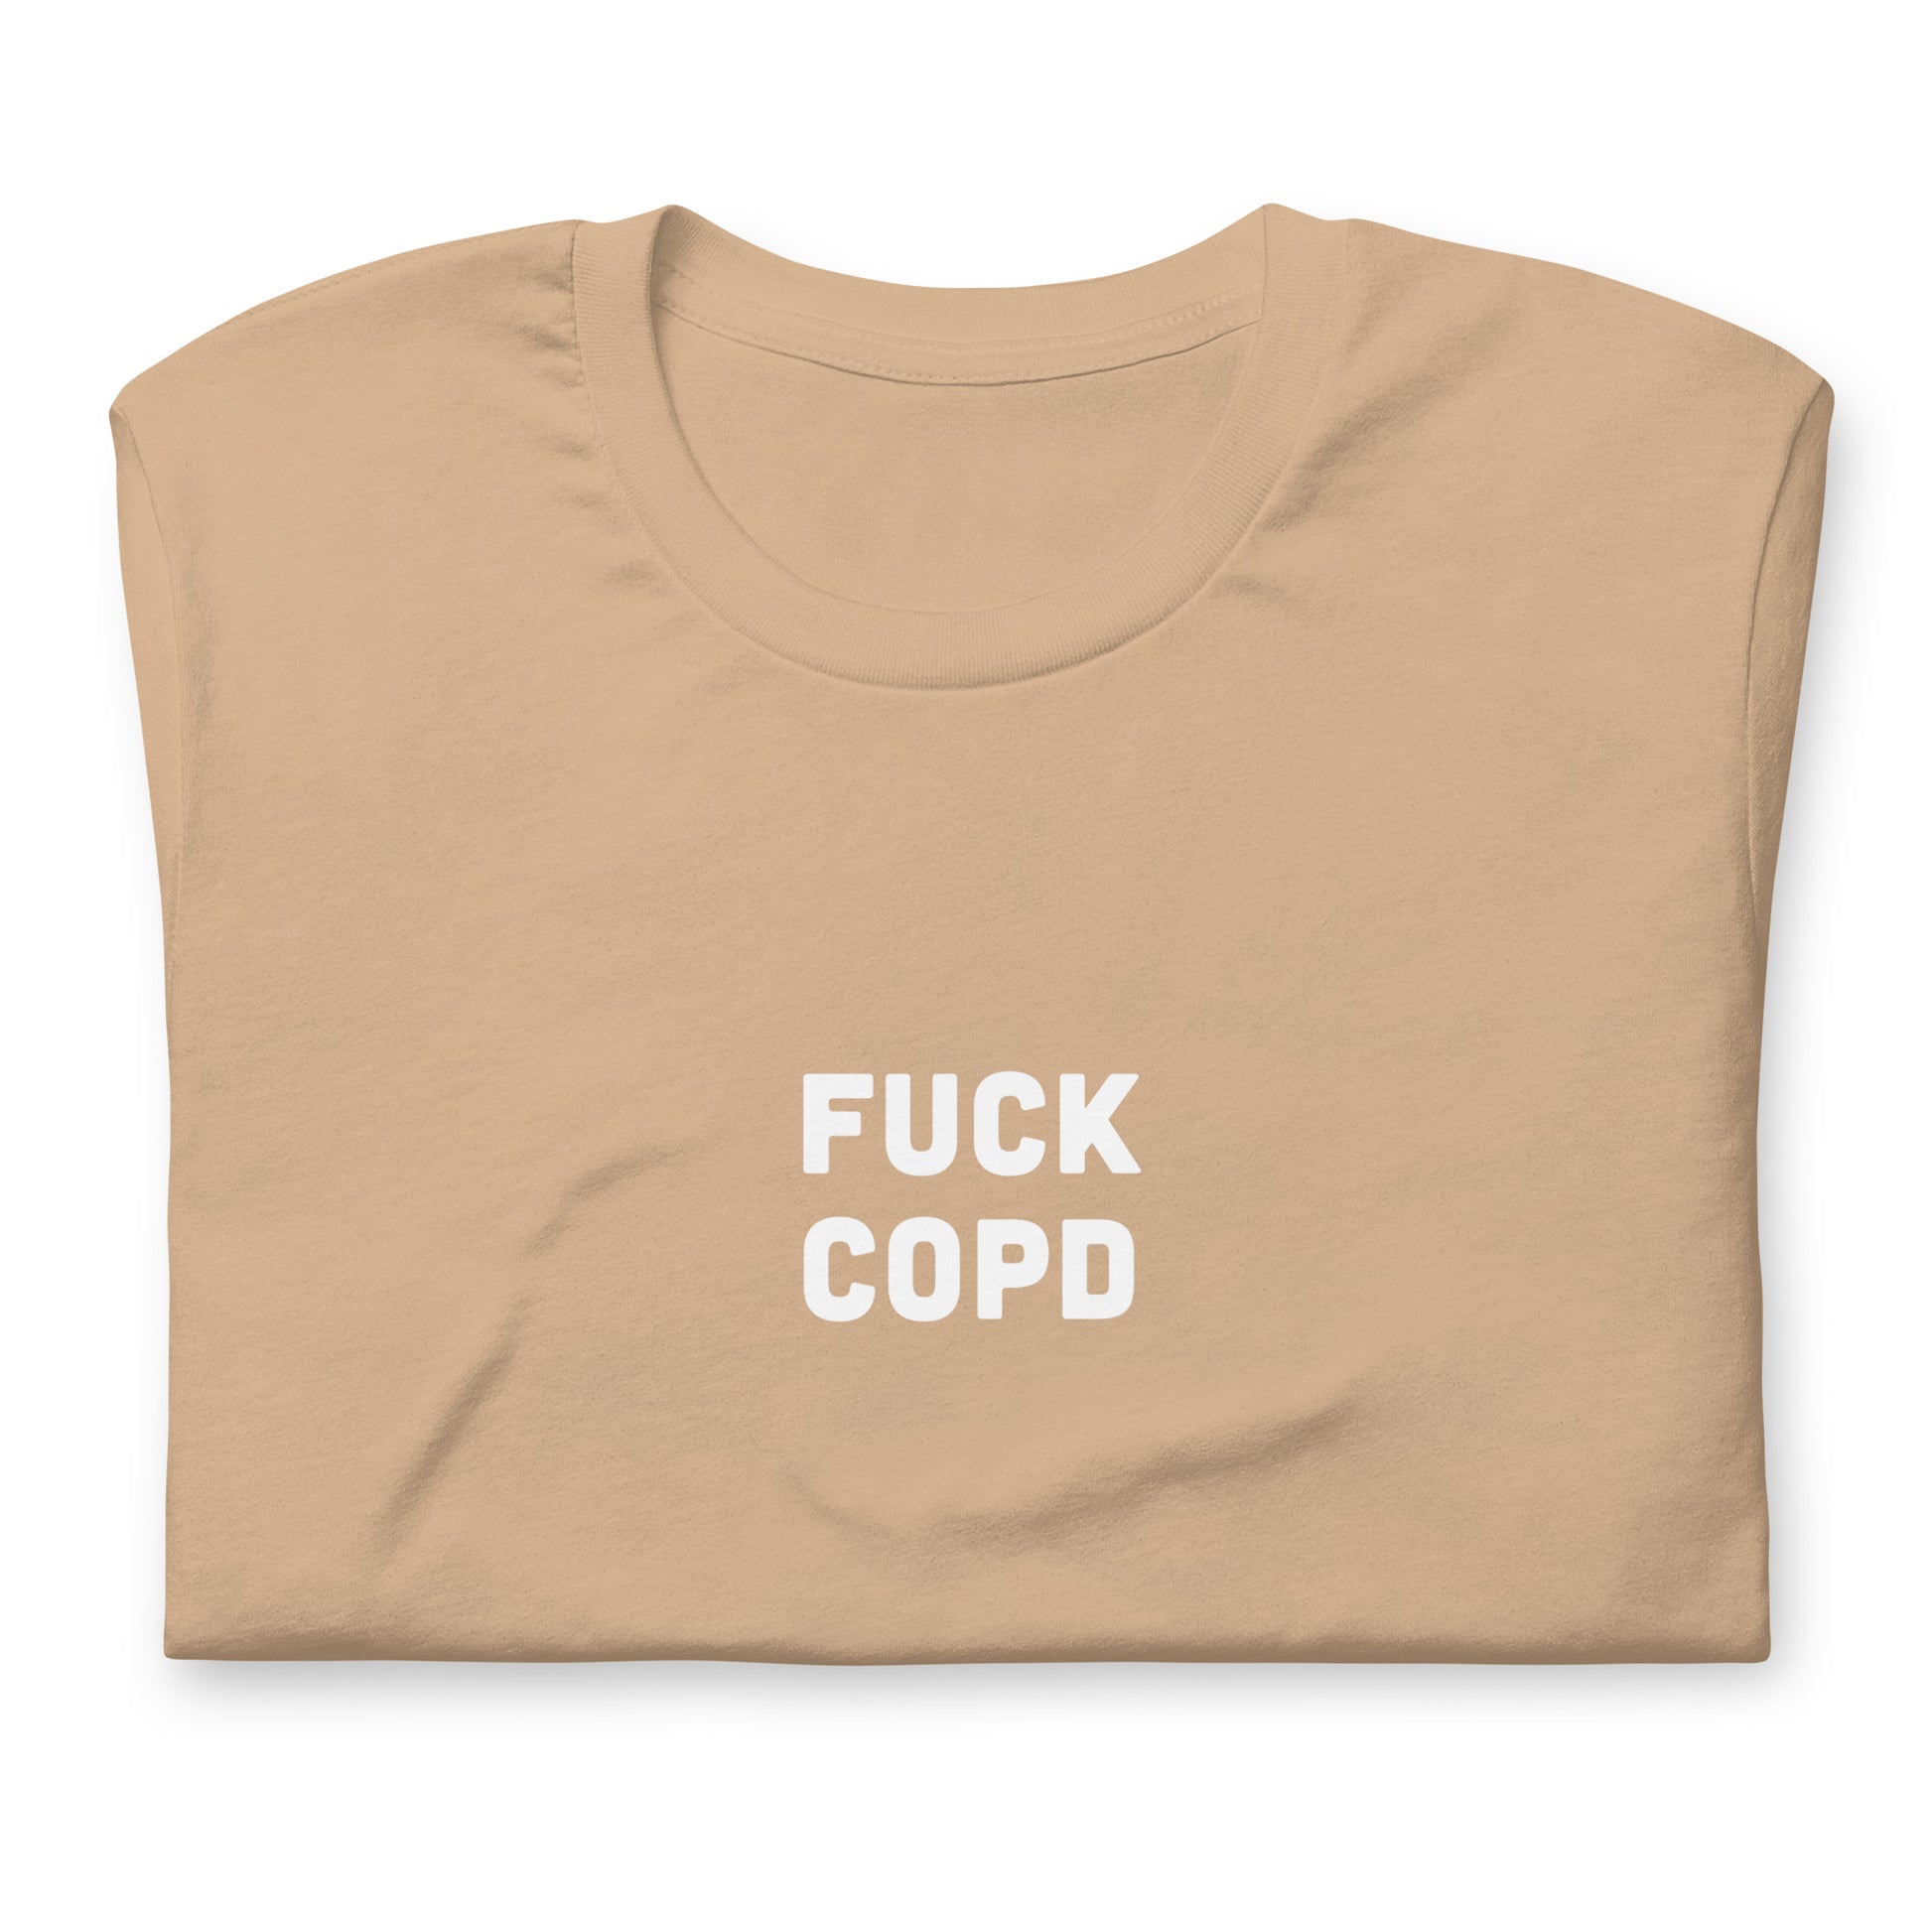 Fuck Copd T-Shirt Size XL Color Forest